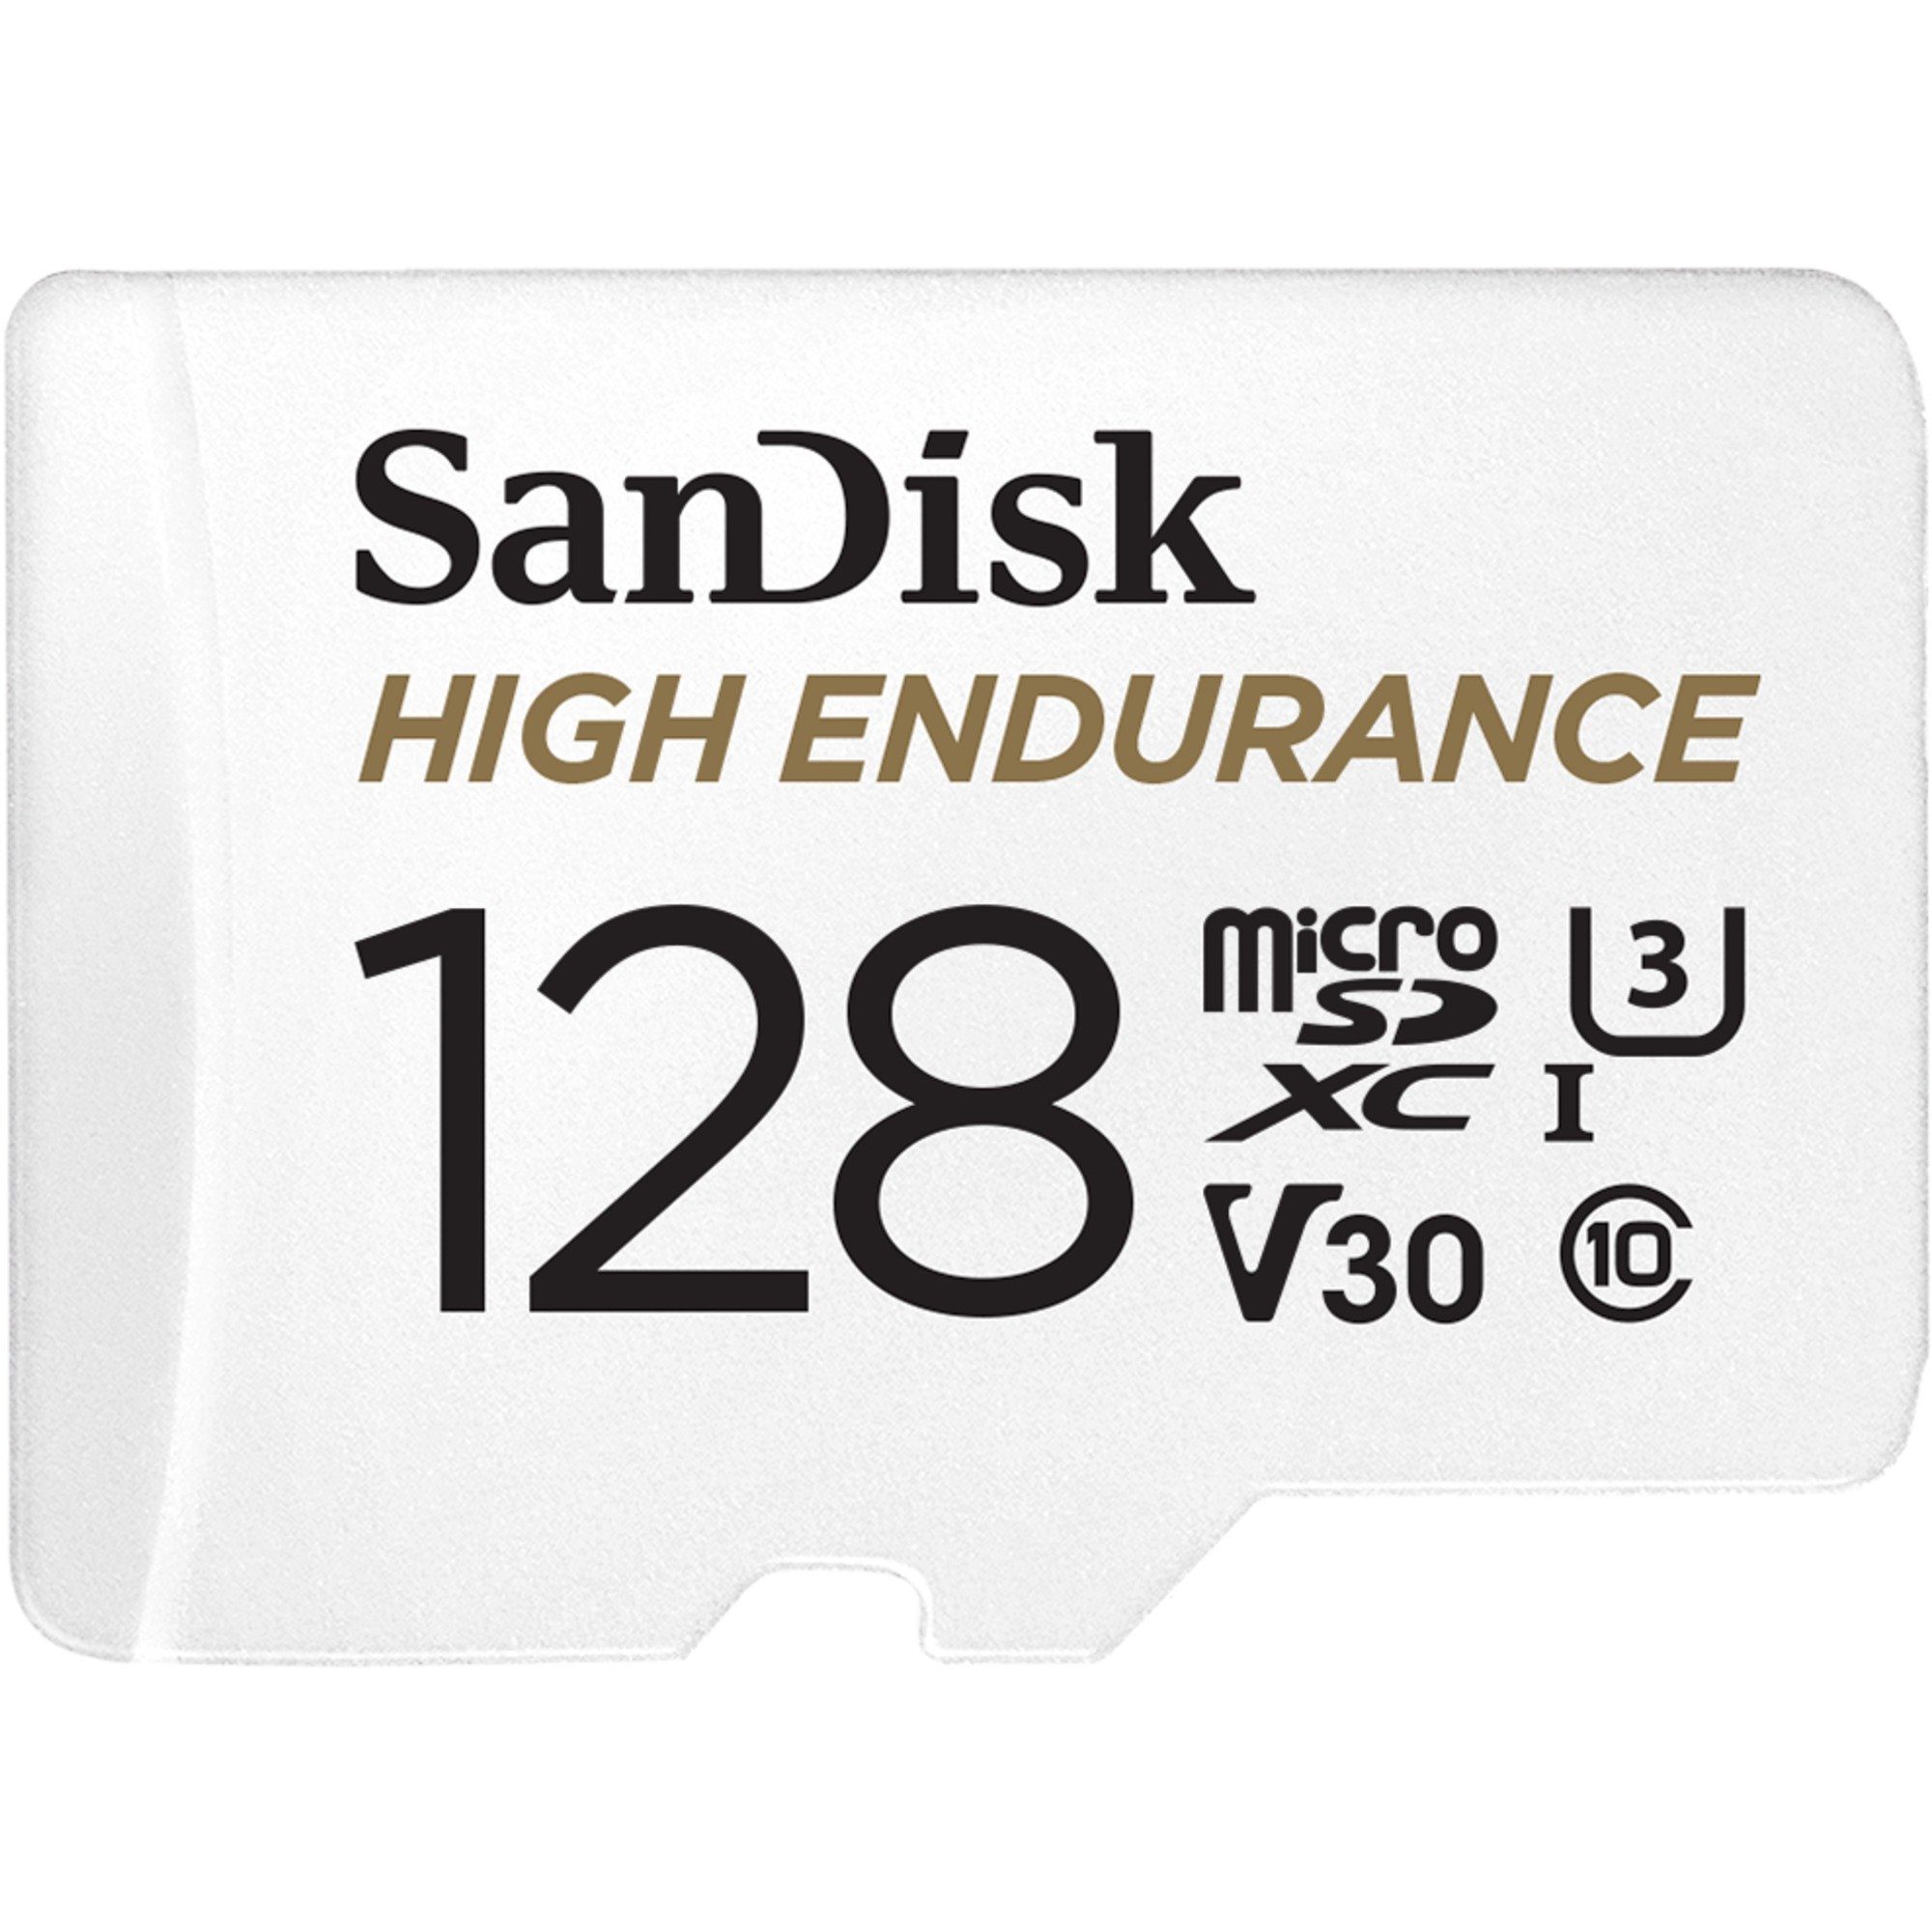 Sandisk 128GB High Endurance, UHS-I U3, Class 10, V30 Speicherkarte